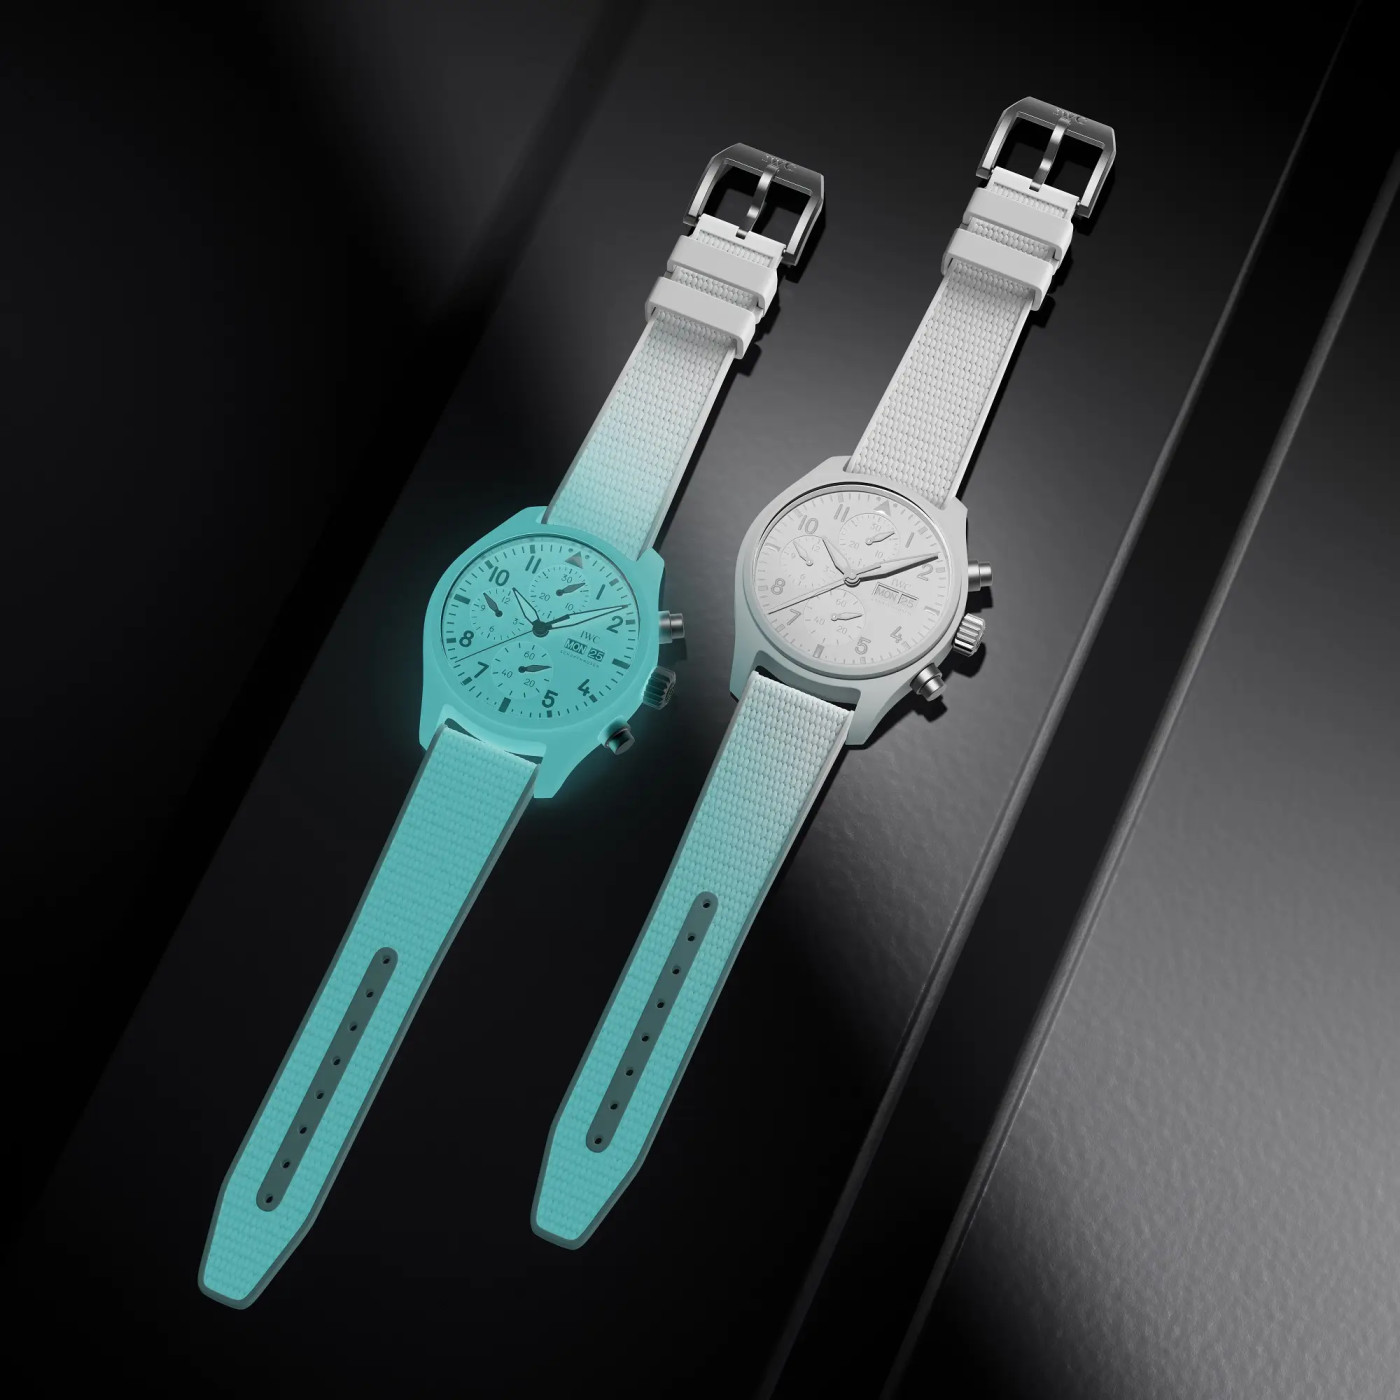 IWC萬國表發布Ceralume夜光瓷技術 並推出首款全夜光陶瓷腕表